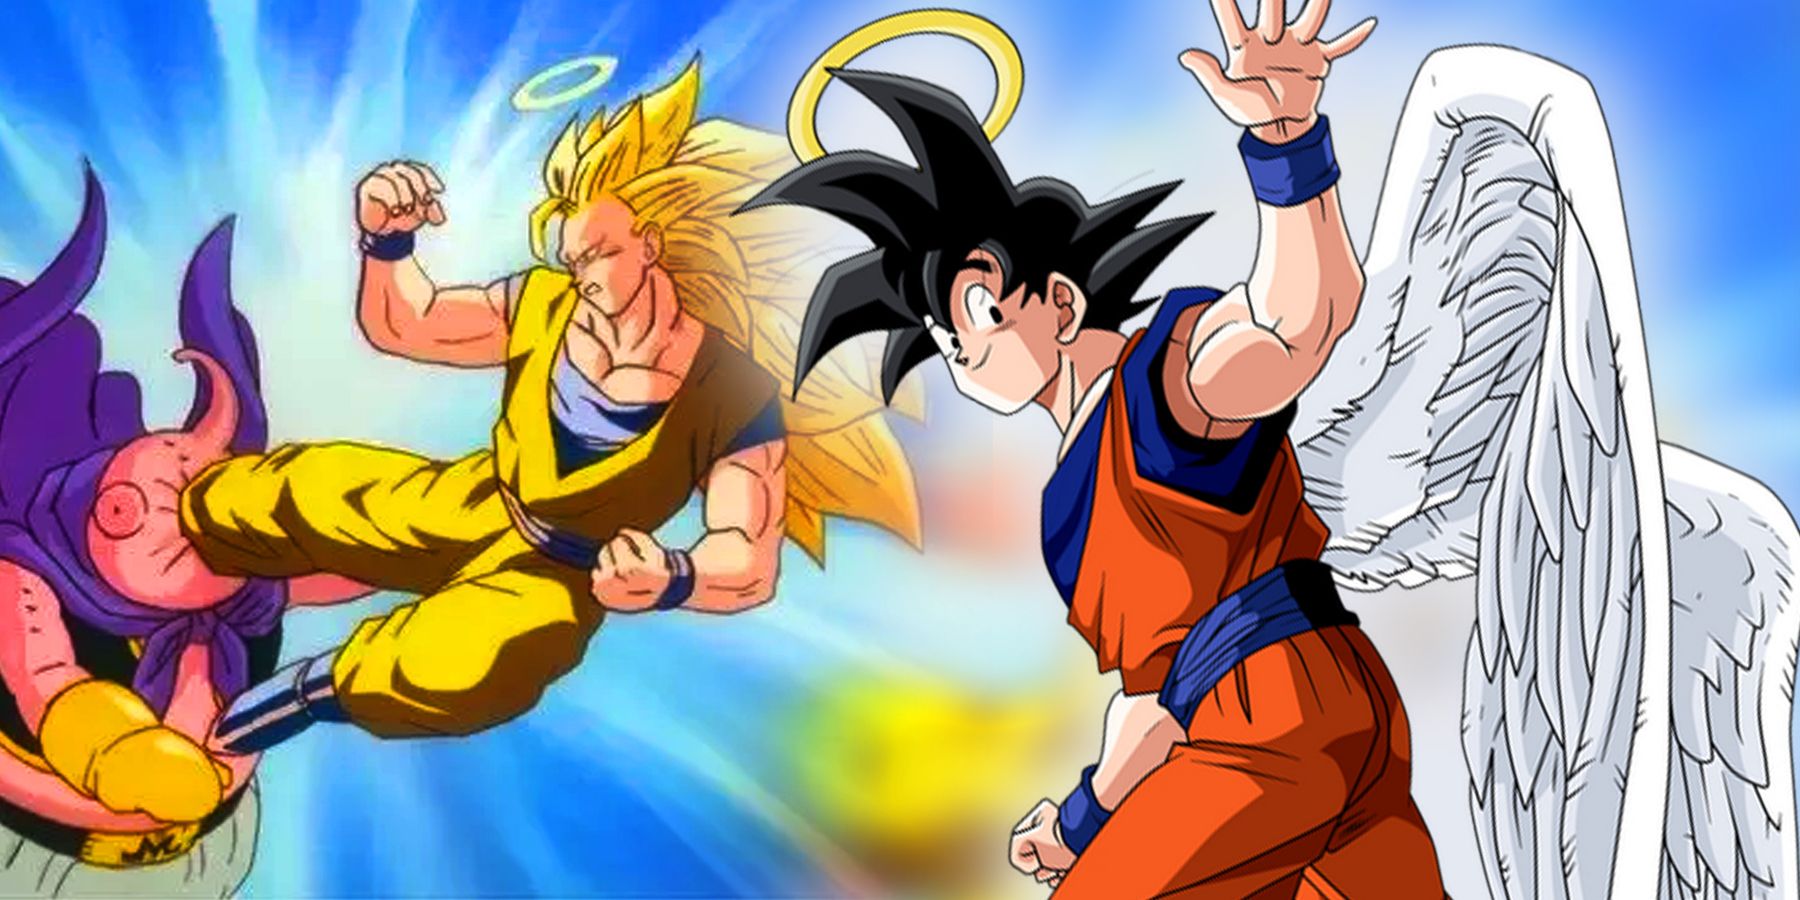 Goku fighting Majin Buu and Goku waving with angel wings and halo from anime Dragon Ball Z